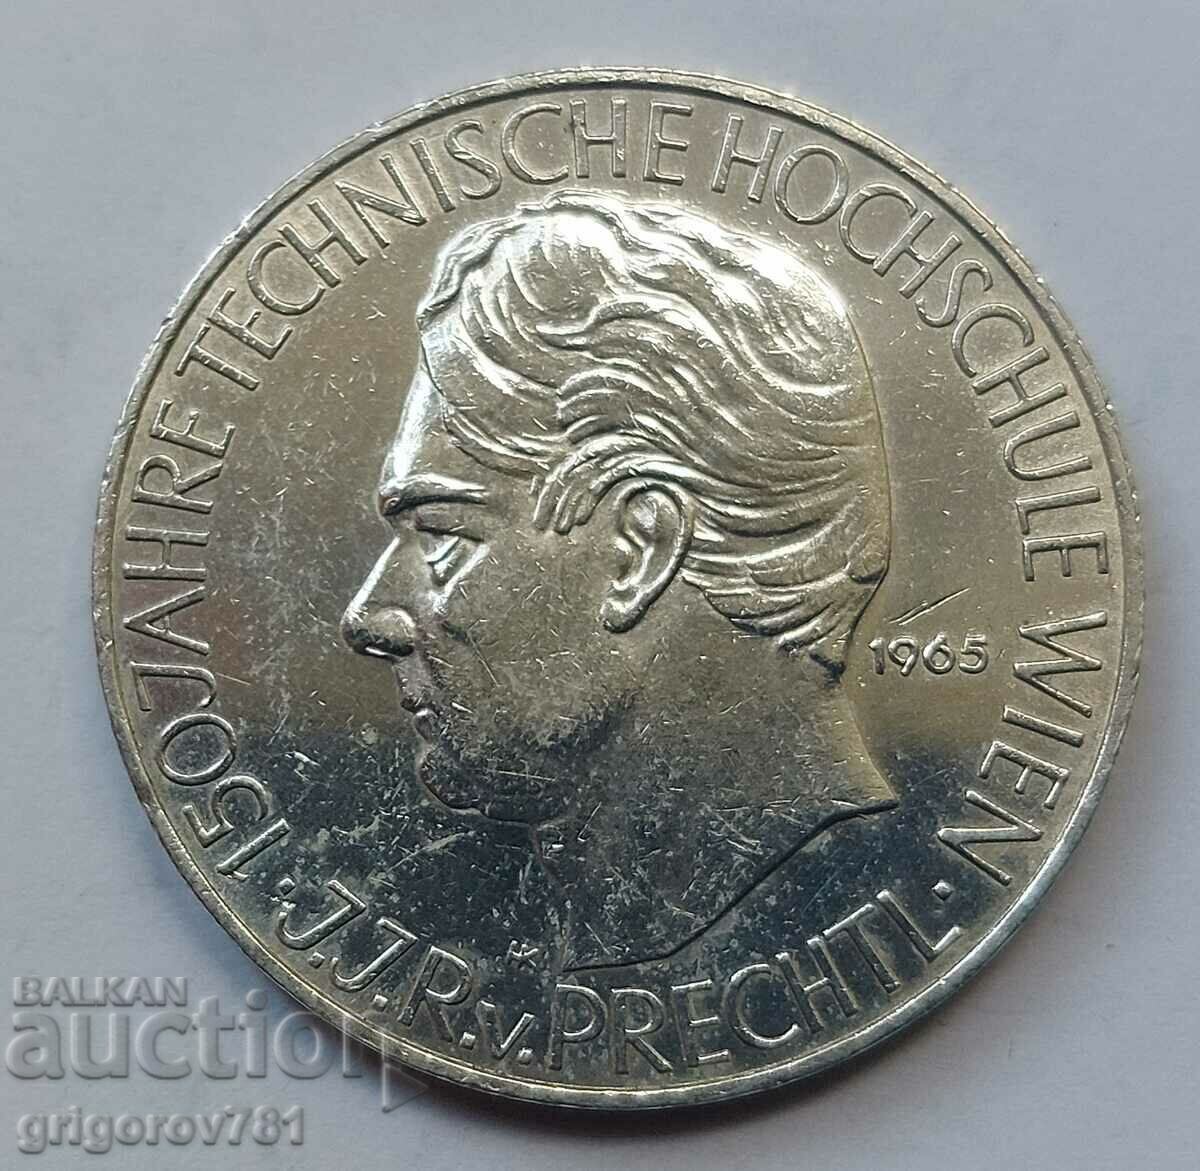 25 Shilling Silver Austria 1965 - Silver Coin #24